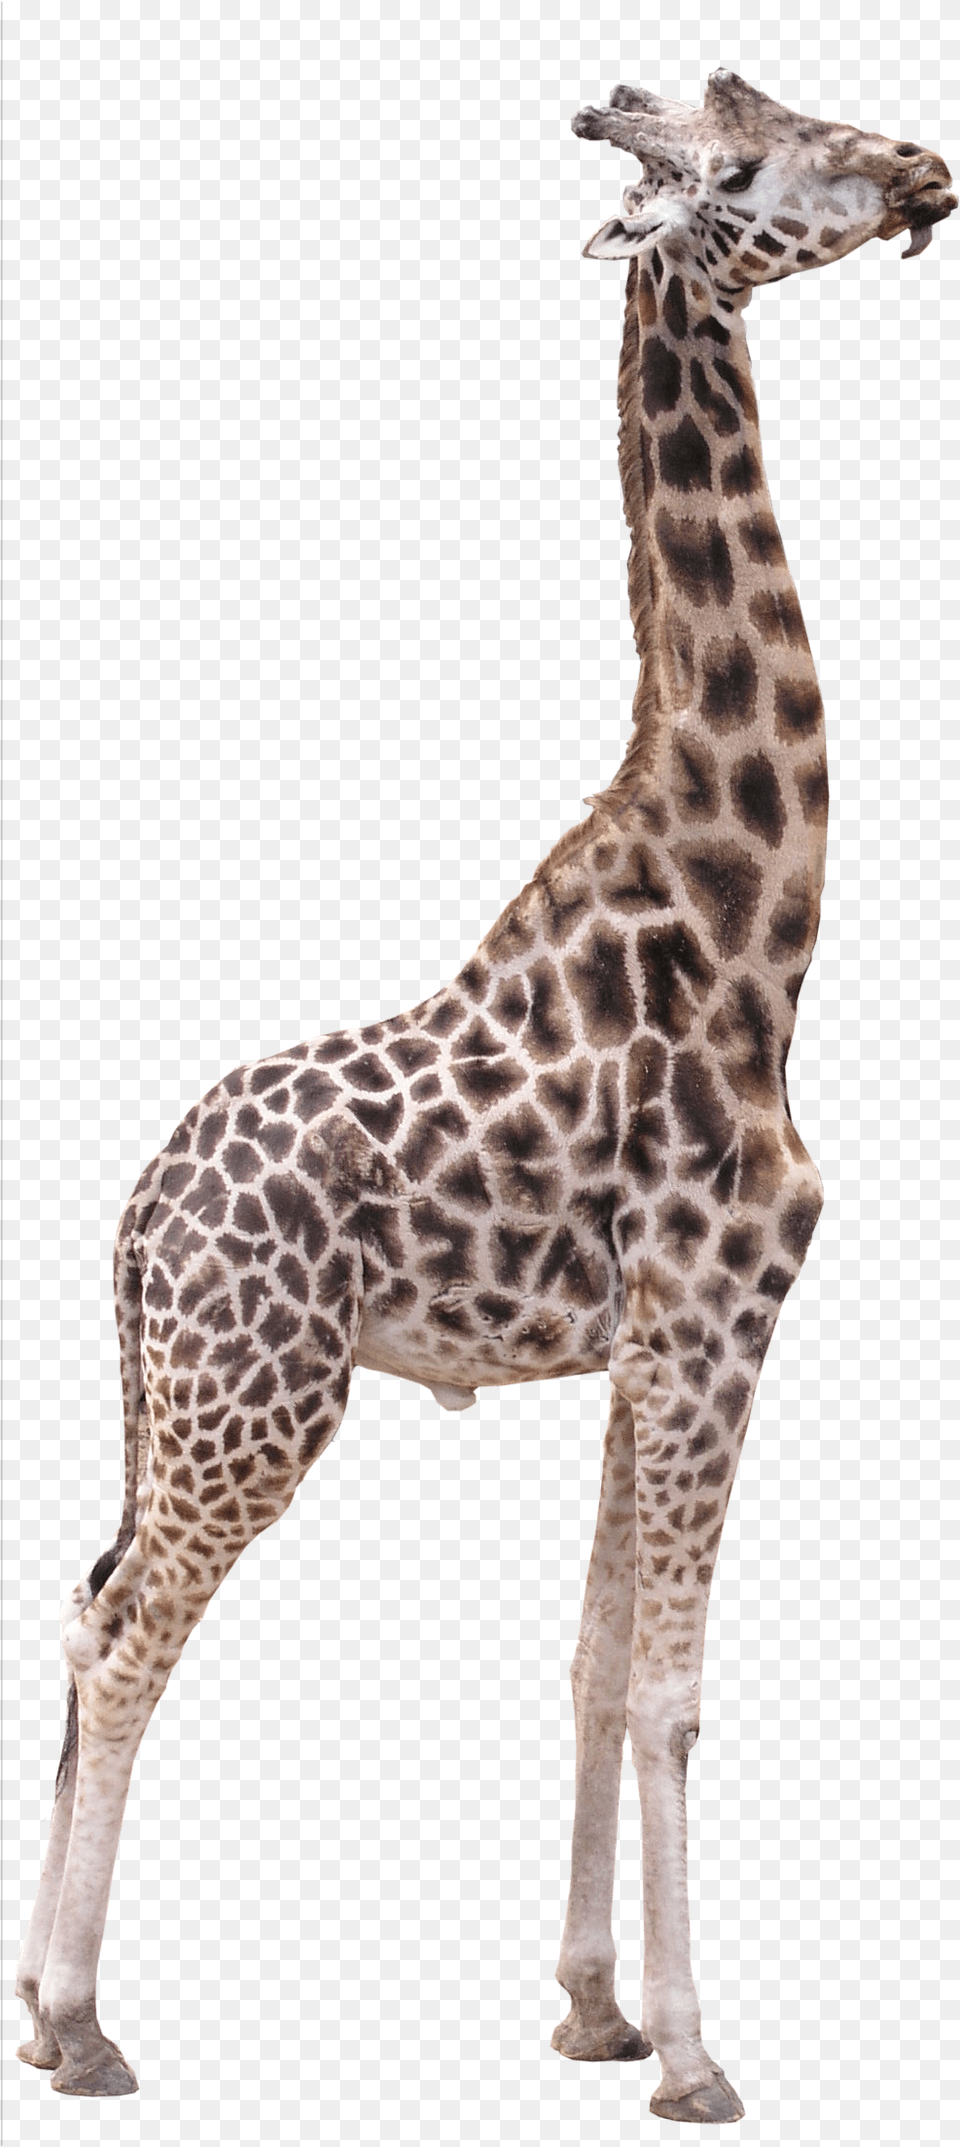 Download 15 Giraffe Transparent For Giraffe Image Transparent Background, Animal, Mammal, Wildlife Png